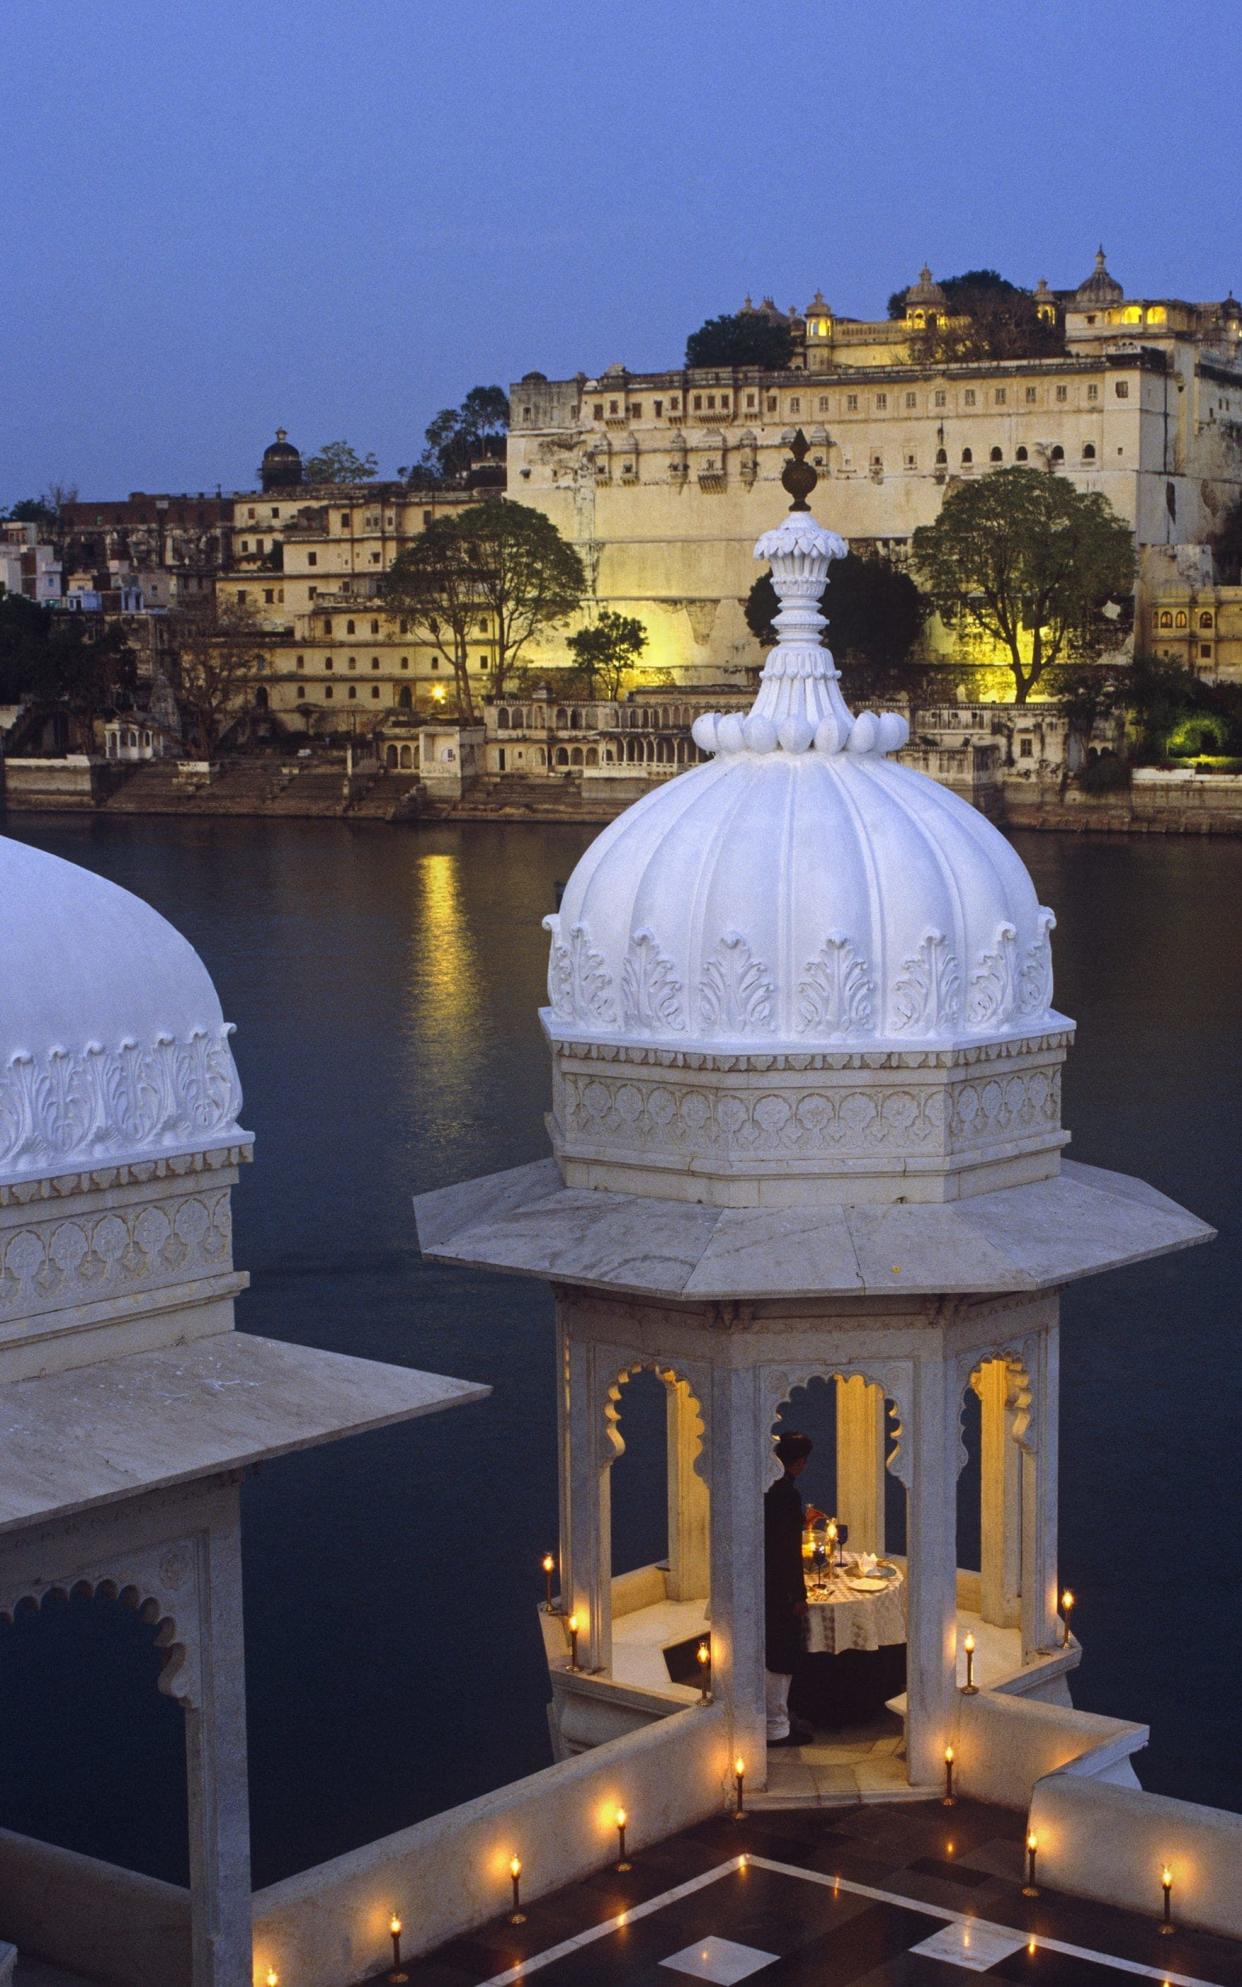 A stay of distinction awaits at Udaipur's Taj Lake Palace hotel